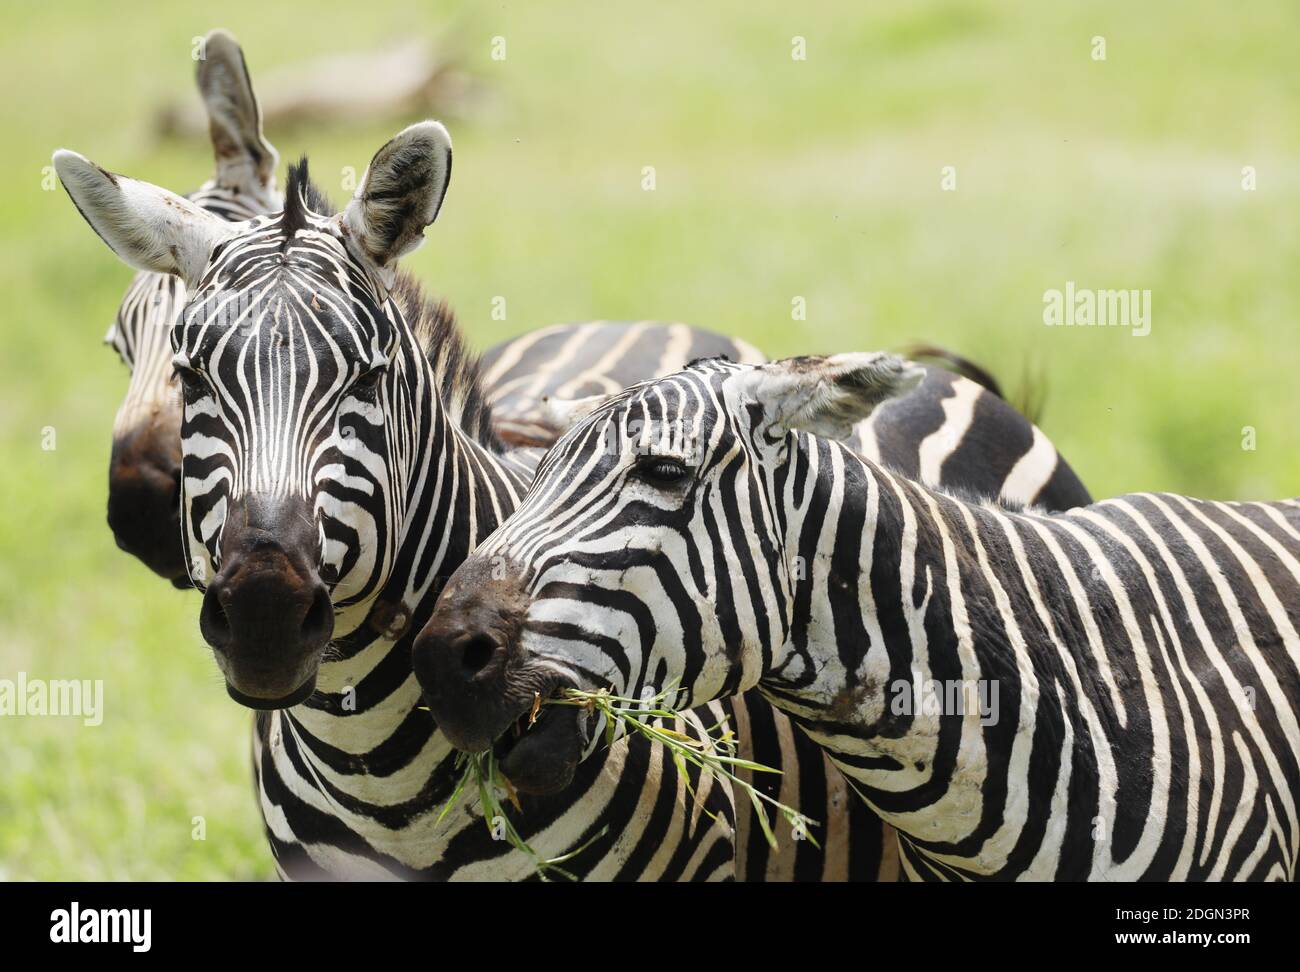 Zebre Nel Parco Nazionale Tsavo Est, Kenya, Africa Foto Stock